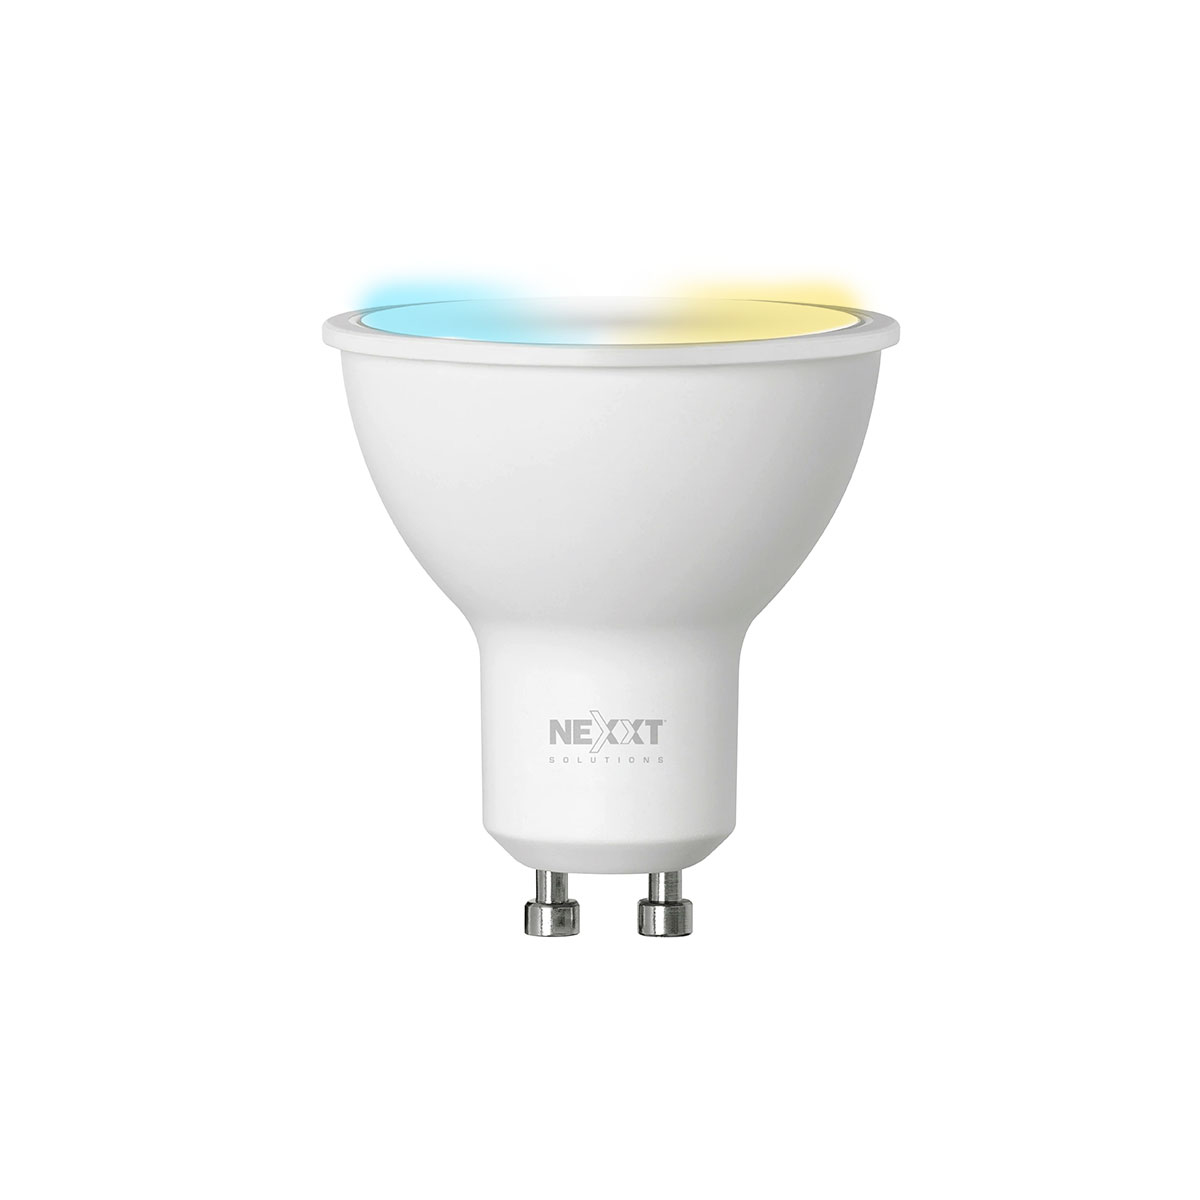 Nexxt Solutions NHB-W310 iluminación inteligente Bombilla inteligente 4 W Blanco Wi-Fi